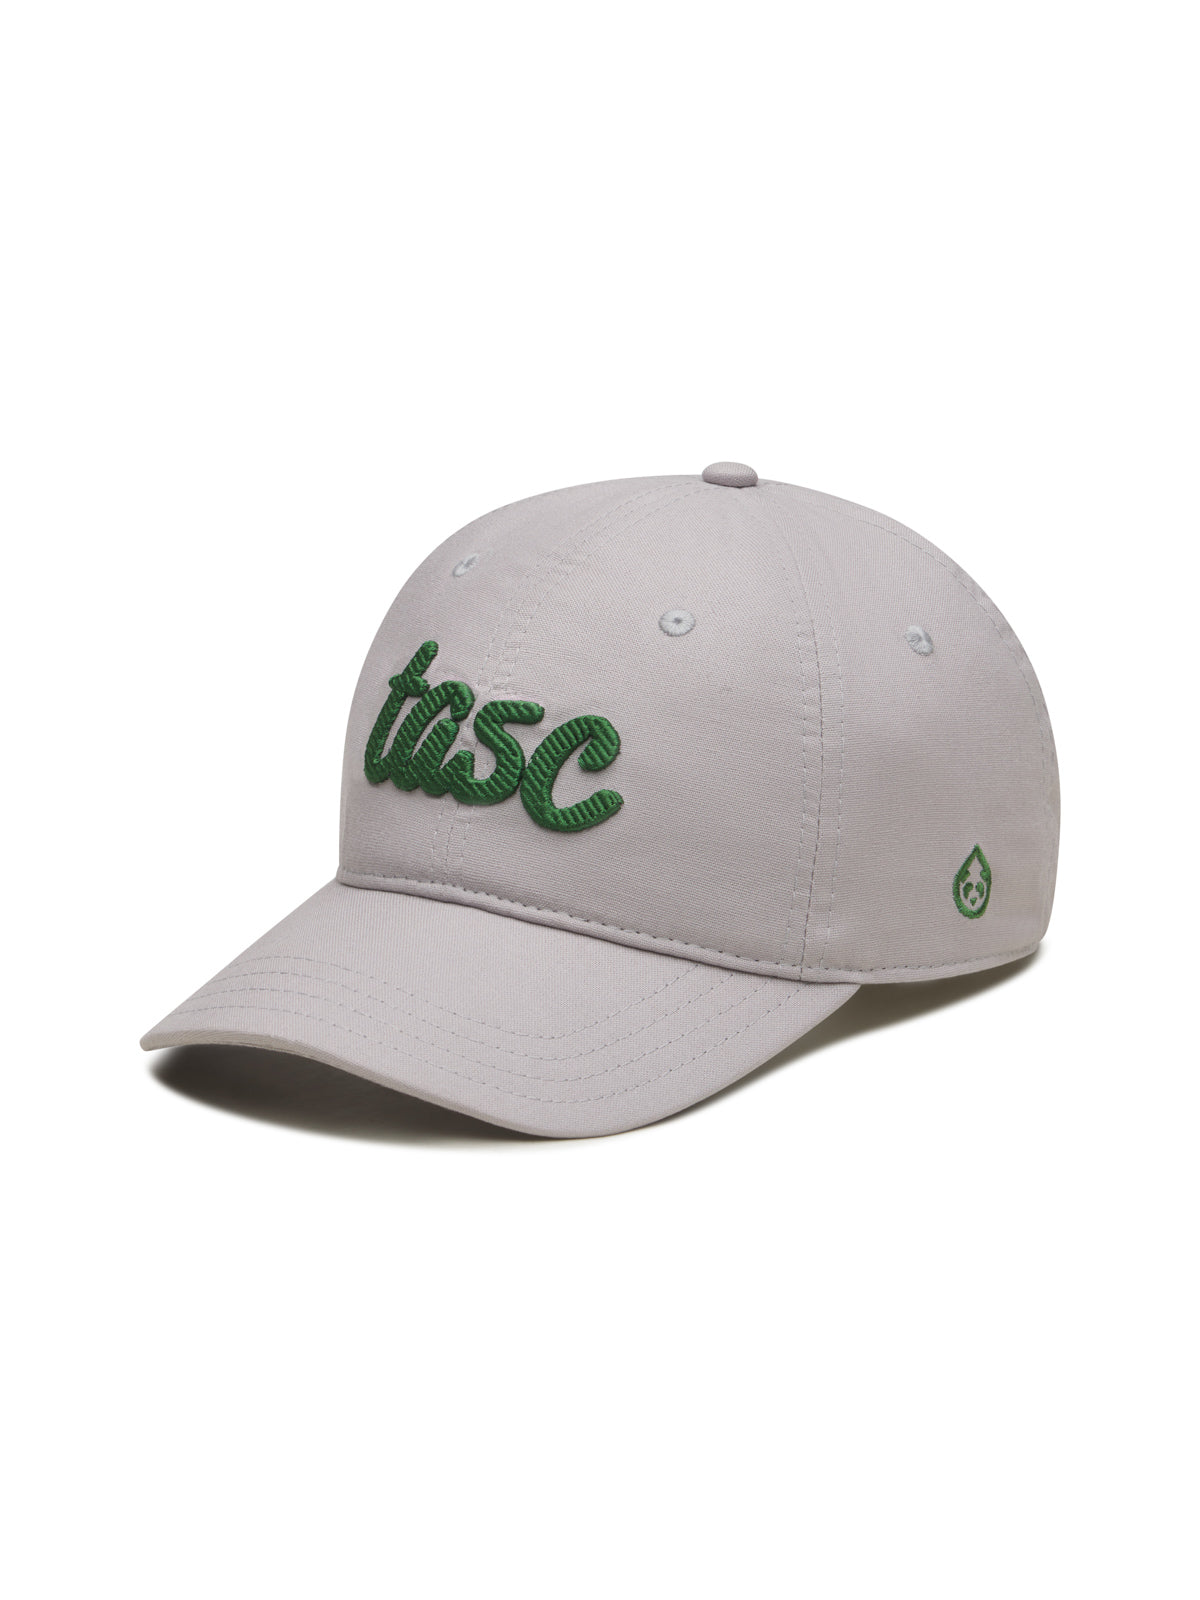 TASC Script Hat - tasc Performance (Steel)